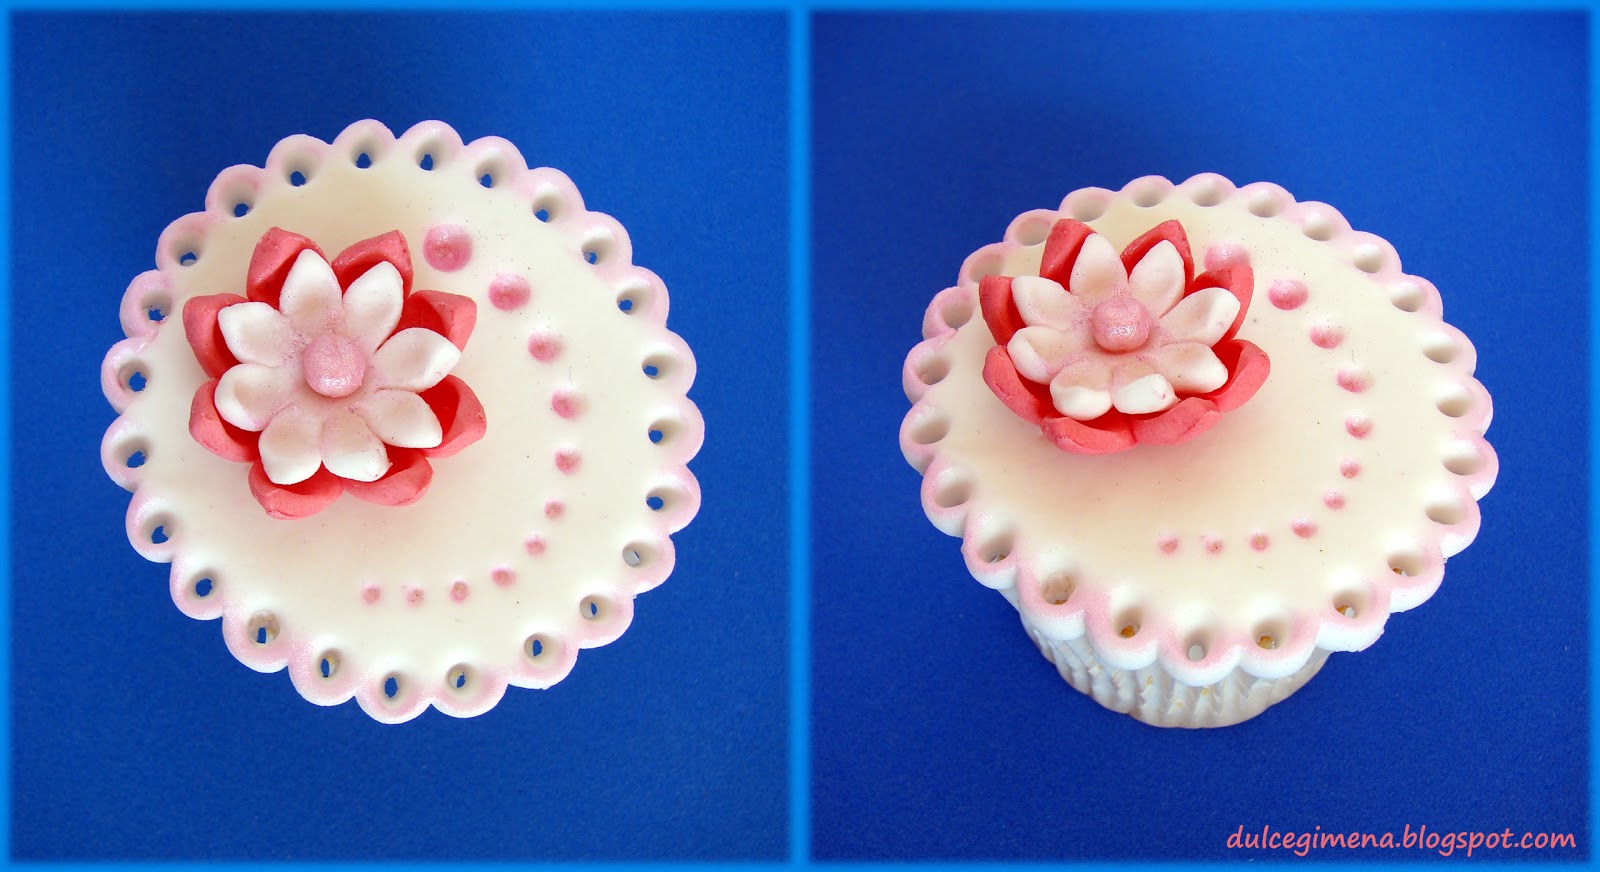 Cupcake decorado con fondant | Dulcegimena